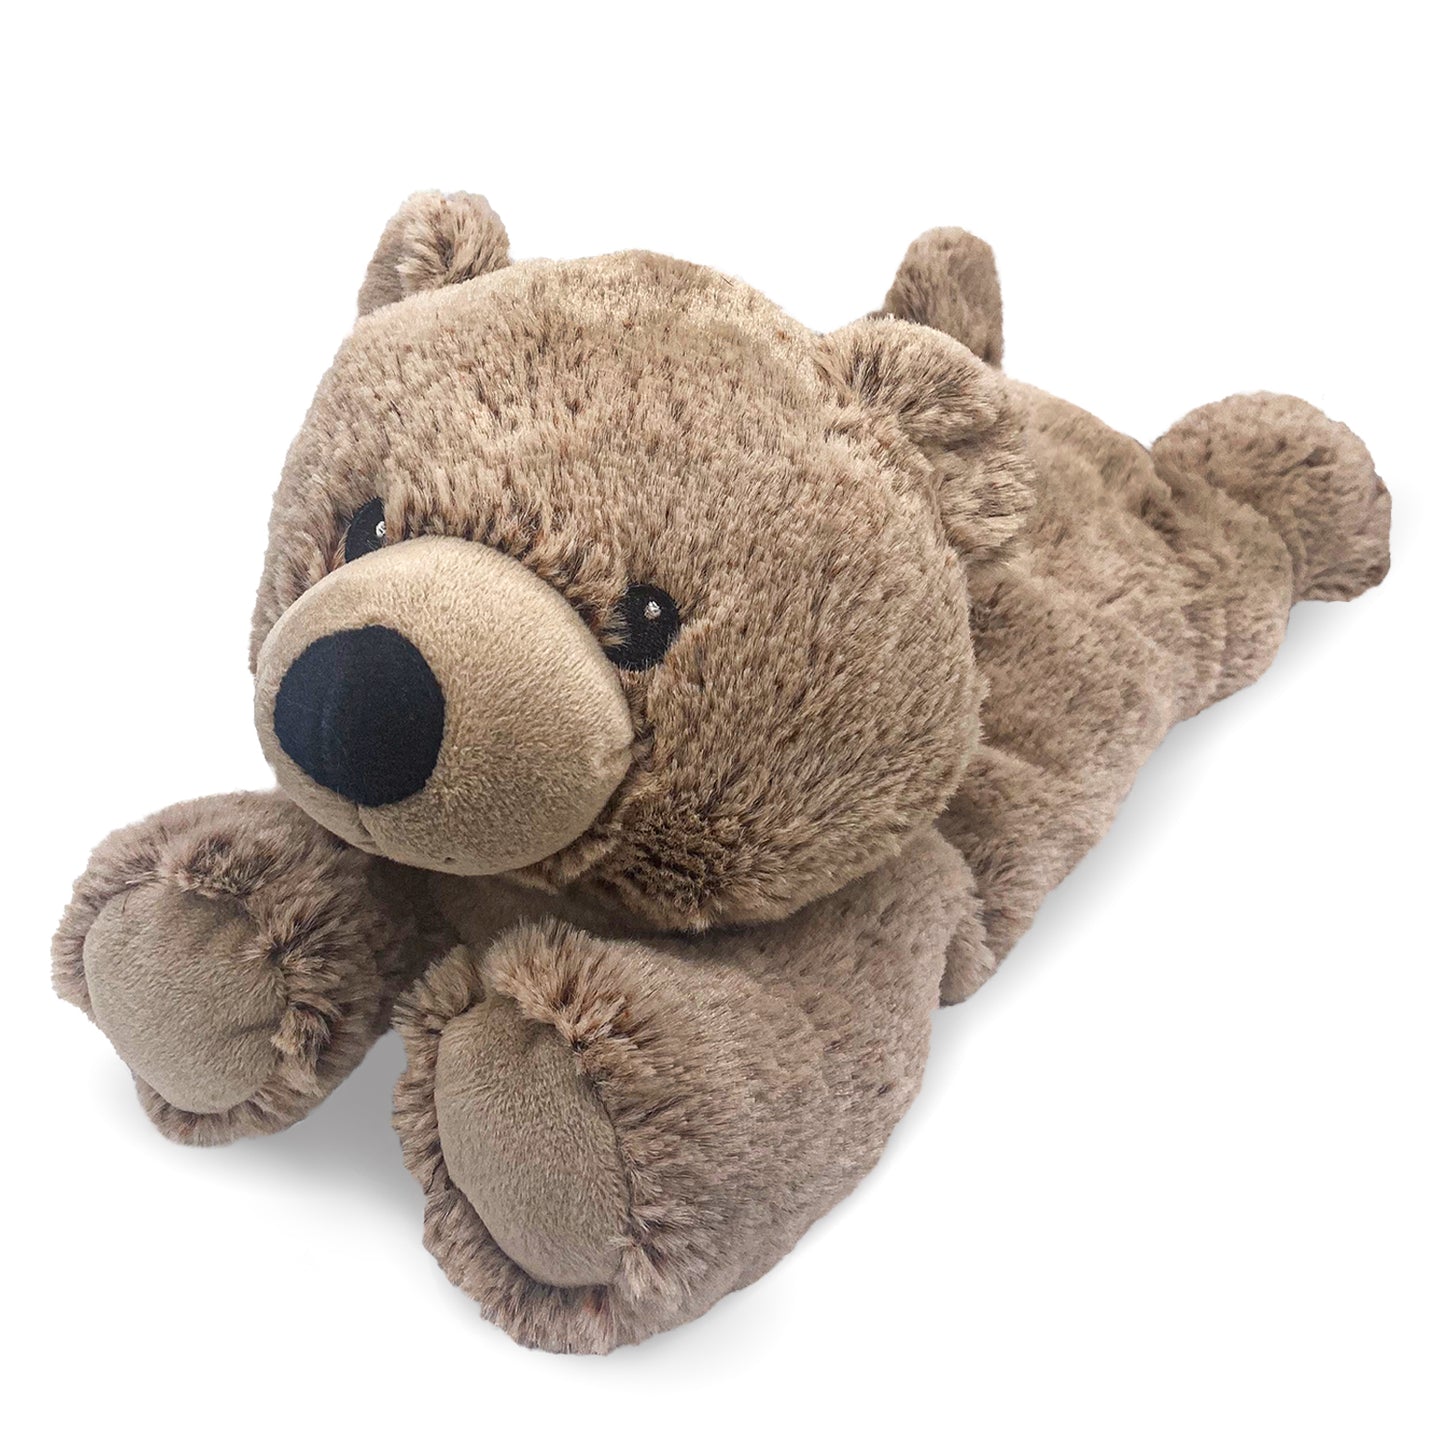 BEAR BROWN - Warmies Cozy Plush Heatable Lavender Scented Stuffed Animal